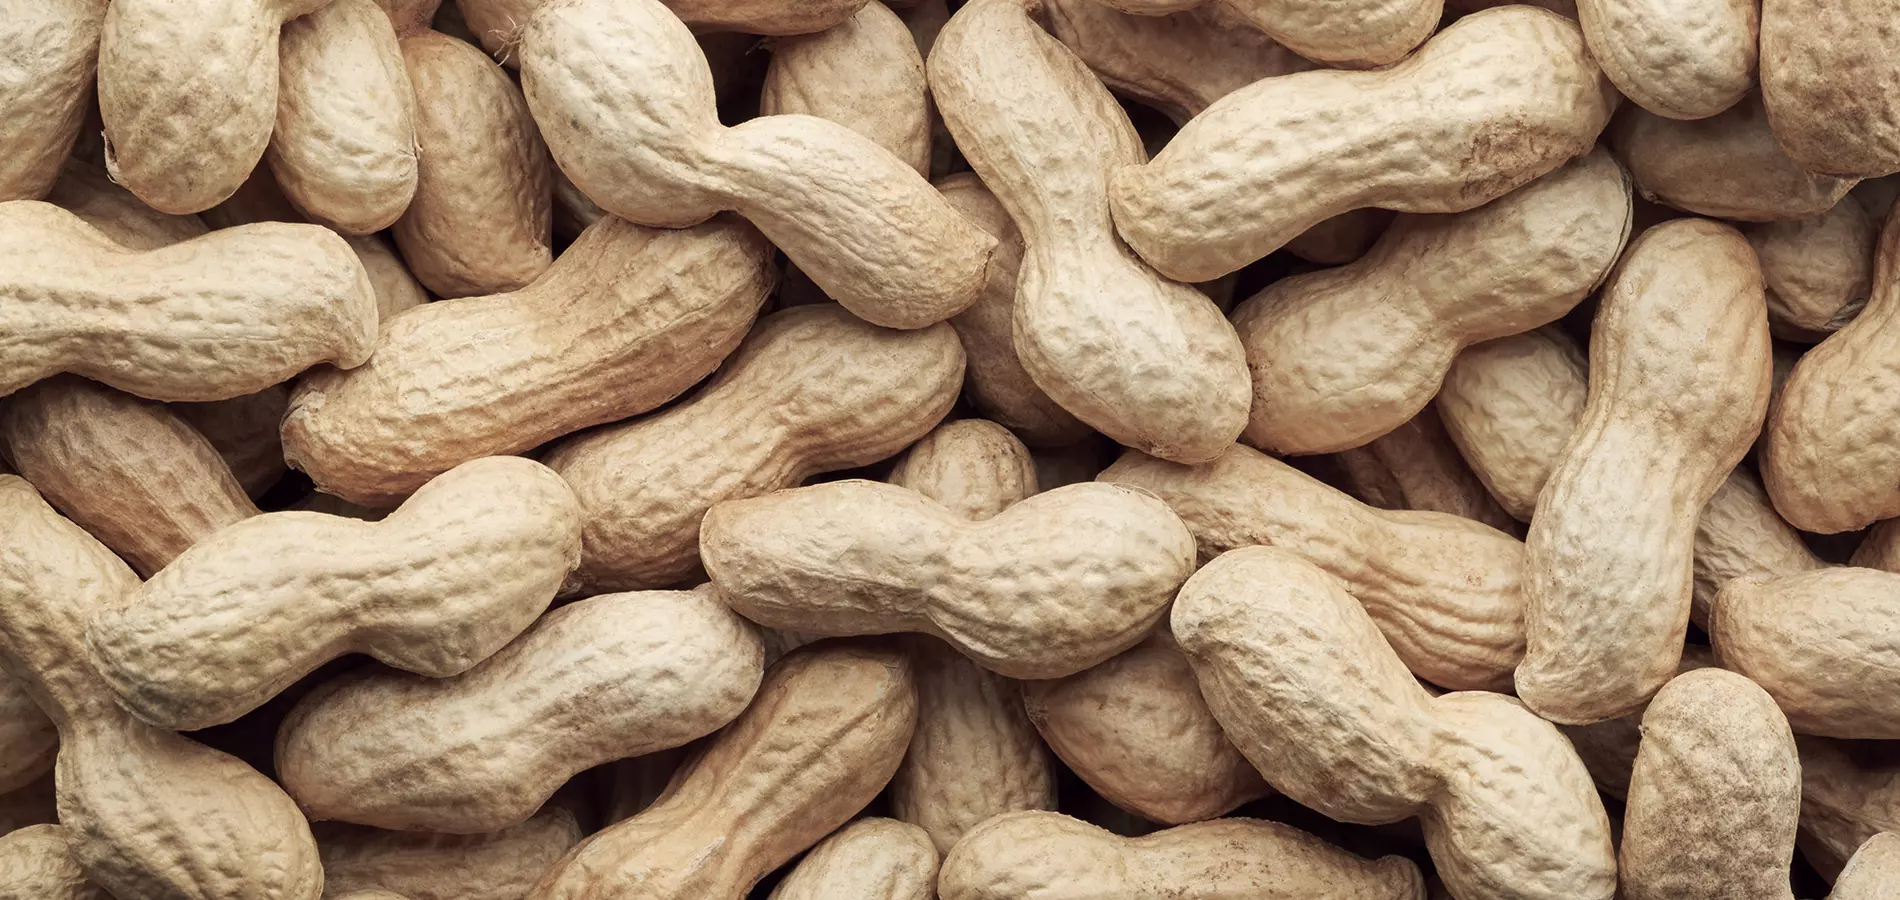 Peanuts close up